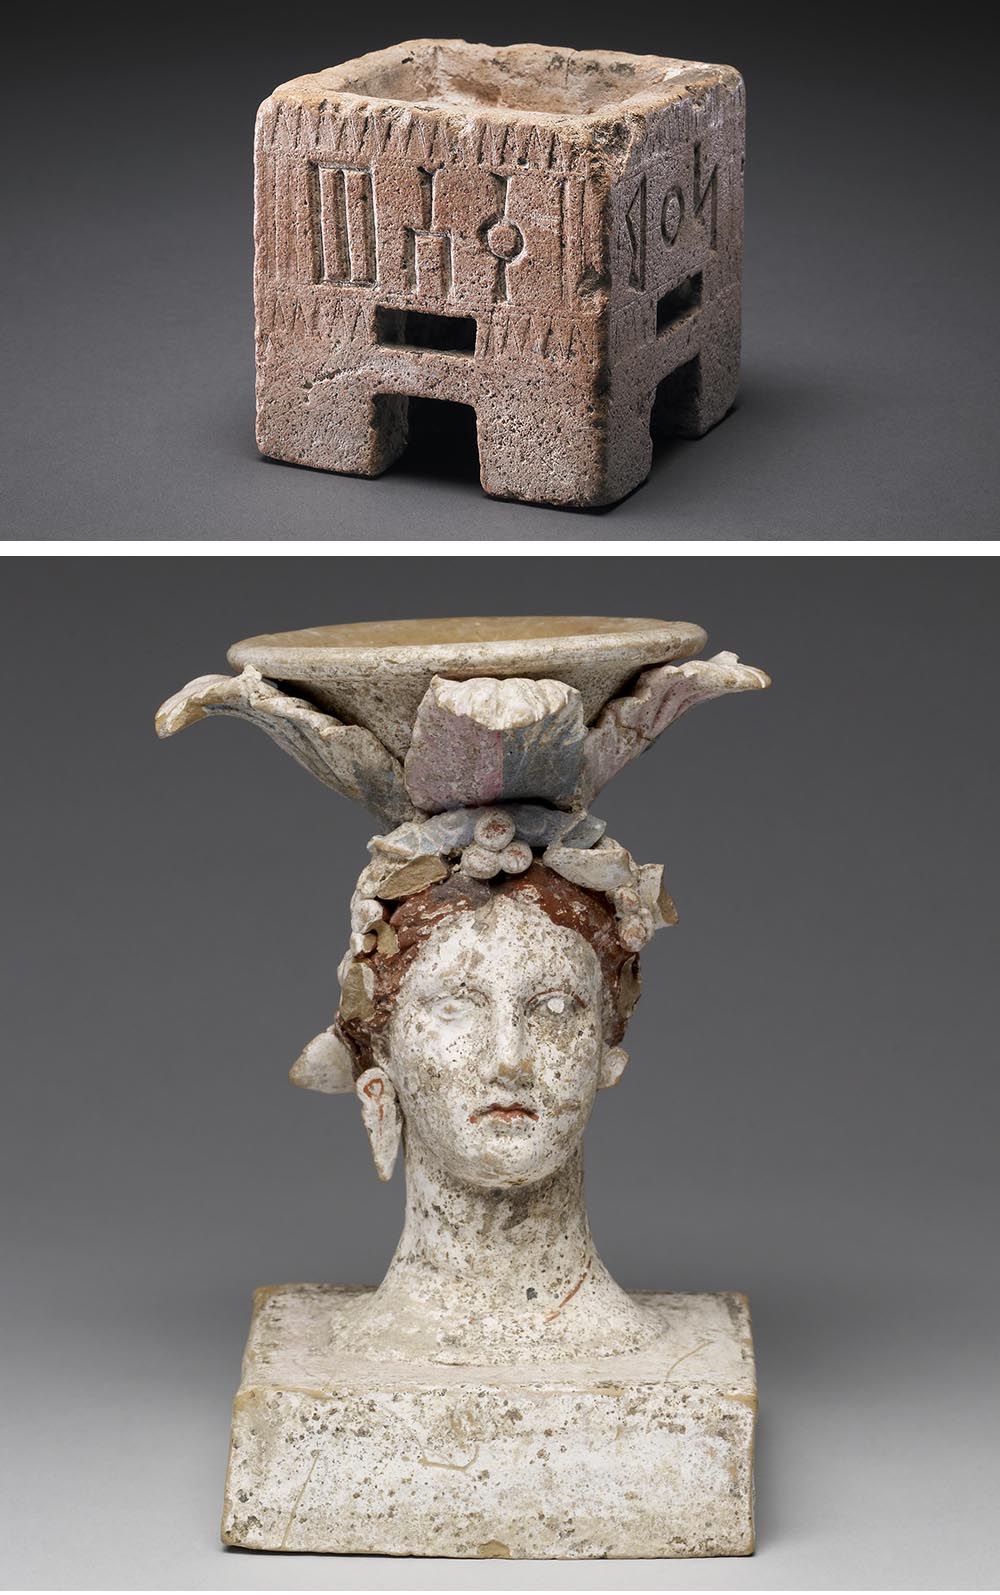 Top: Incense burner, Yemen, circa first century BC. Bottom: Incense burner in the form of a female head, Greece, third century BC.